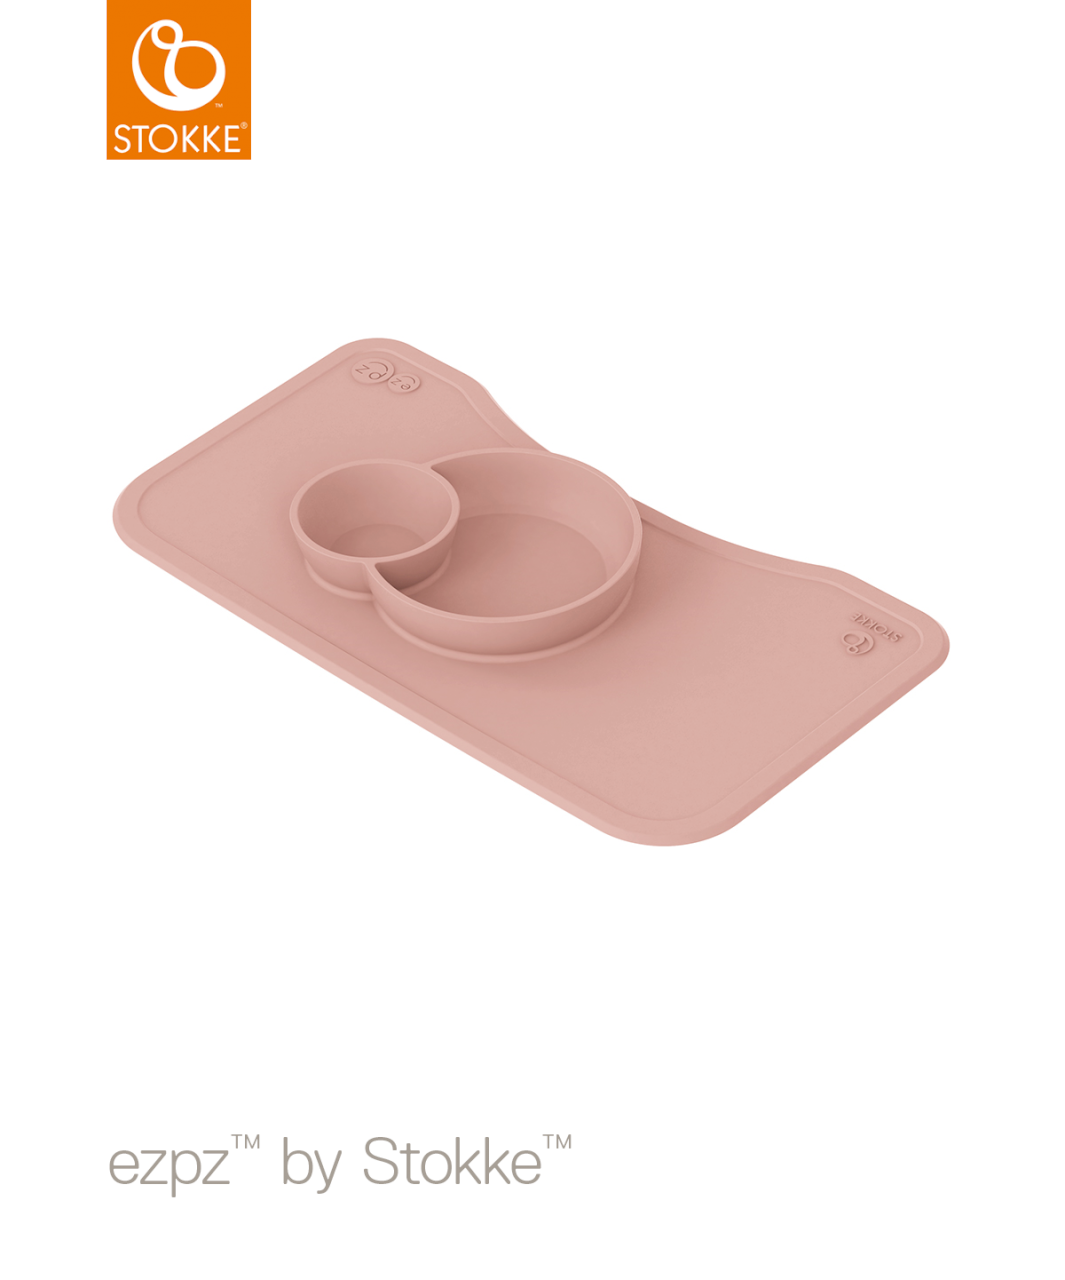 Подложка для подноса steps tray stokke ezpz pink, розовый фото